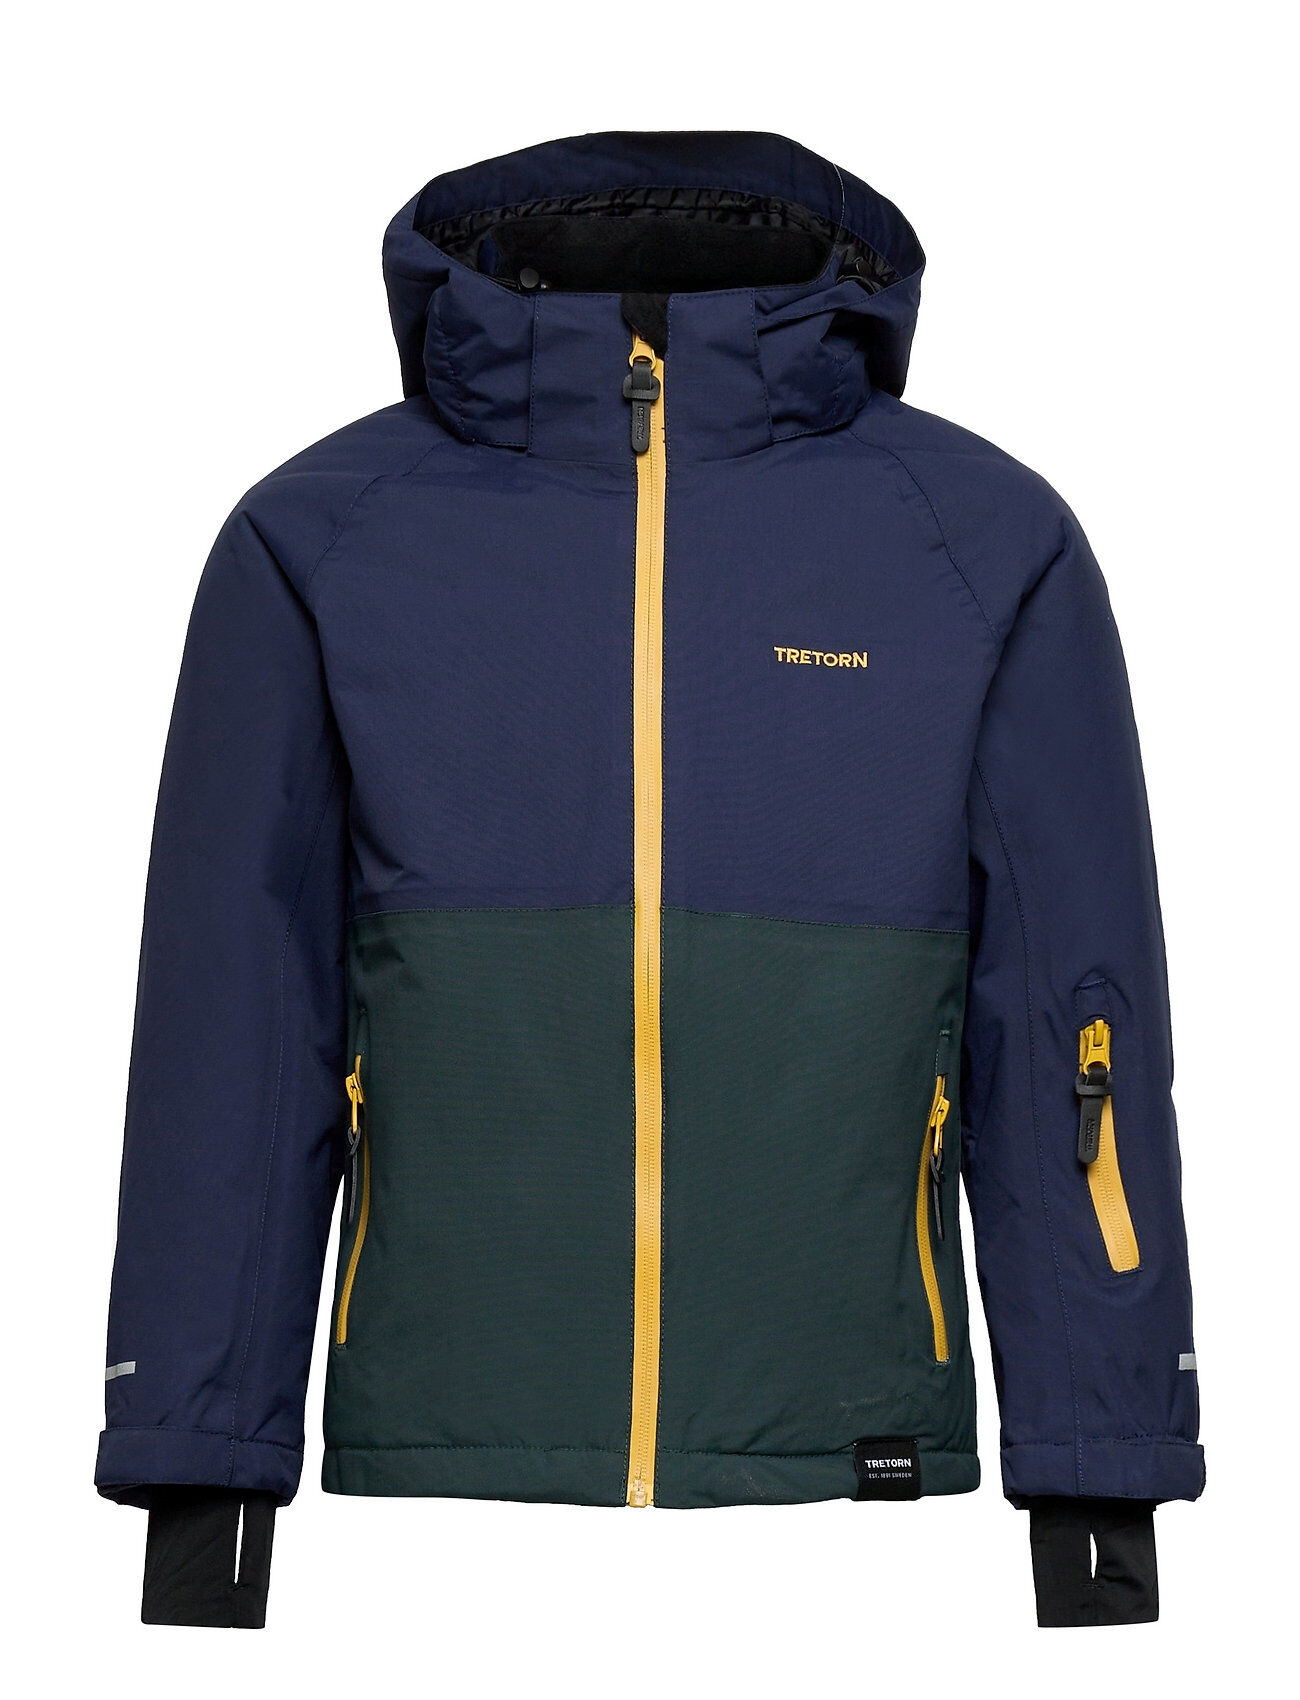 Tretorn Aktiv Cold Weather Jacket Outerwear Snow/ski Clothing Snow/ski Jacket Blå Tretorn